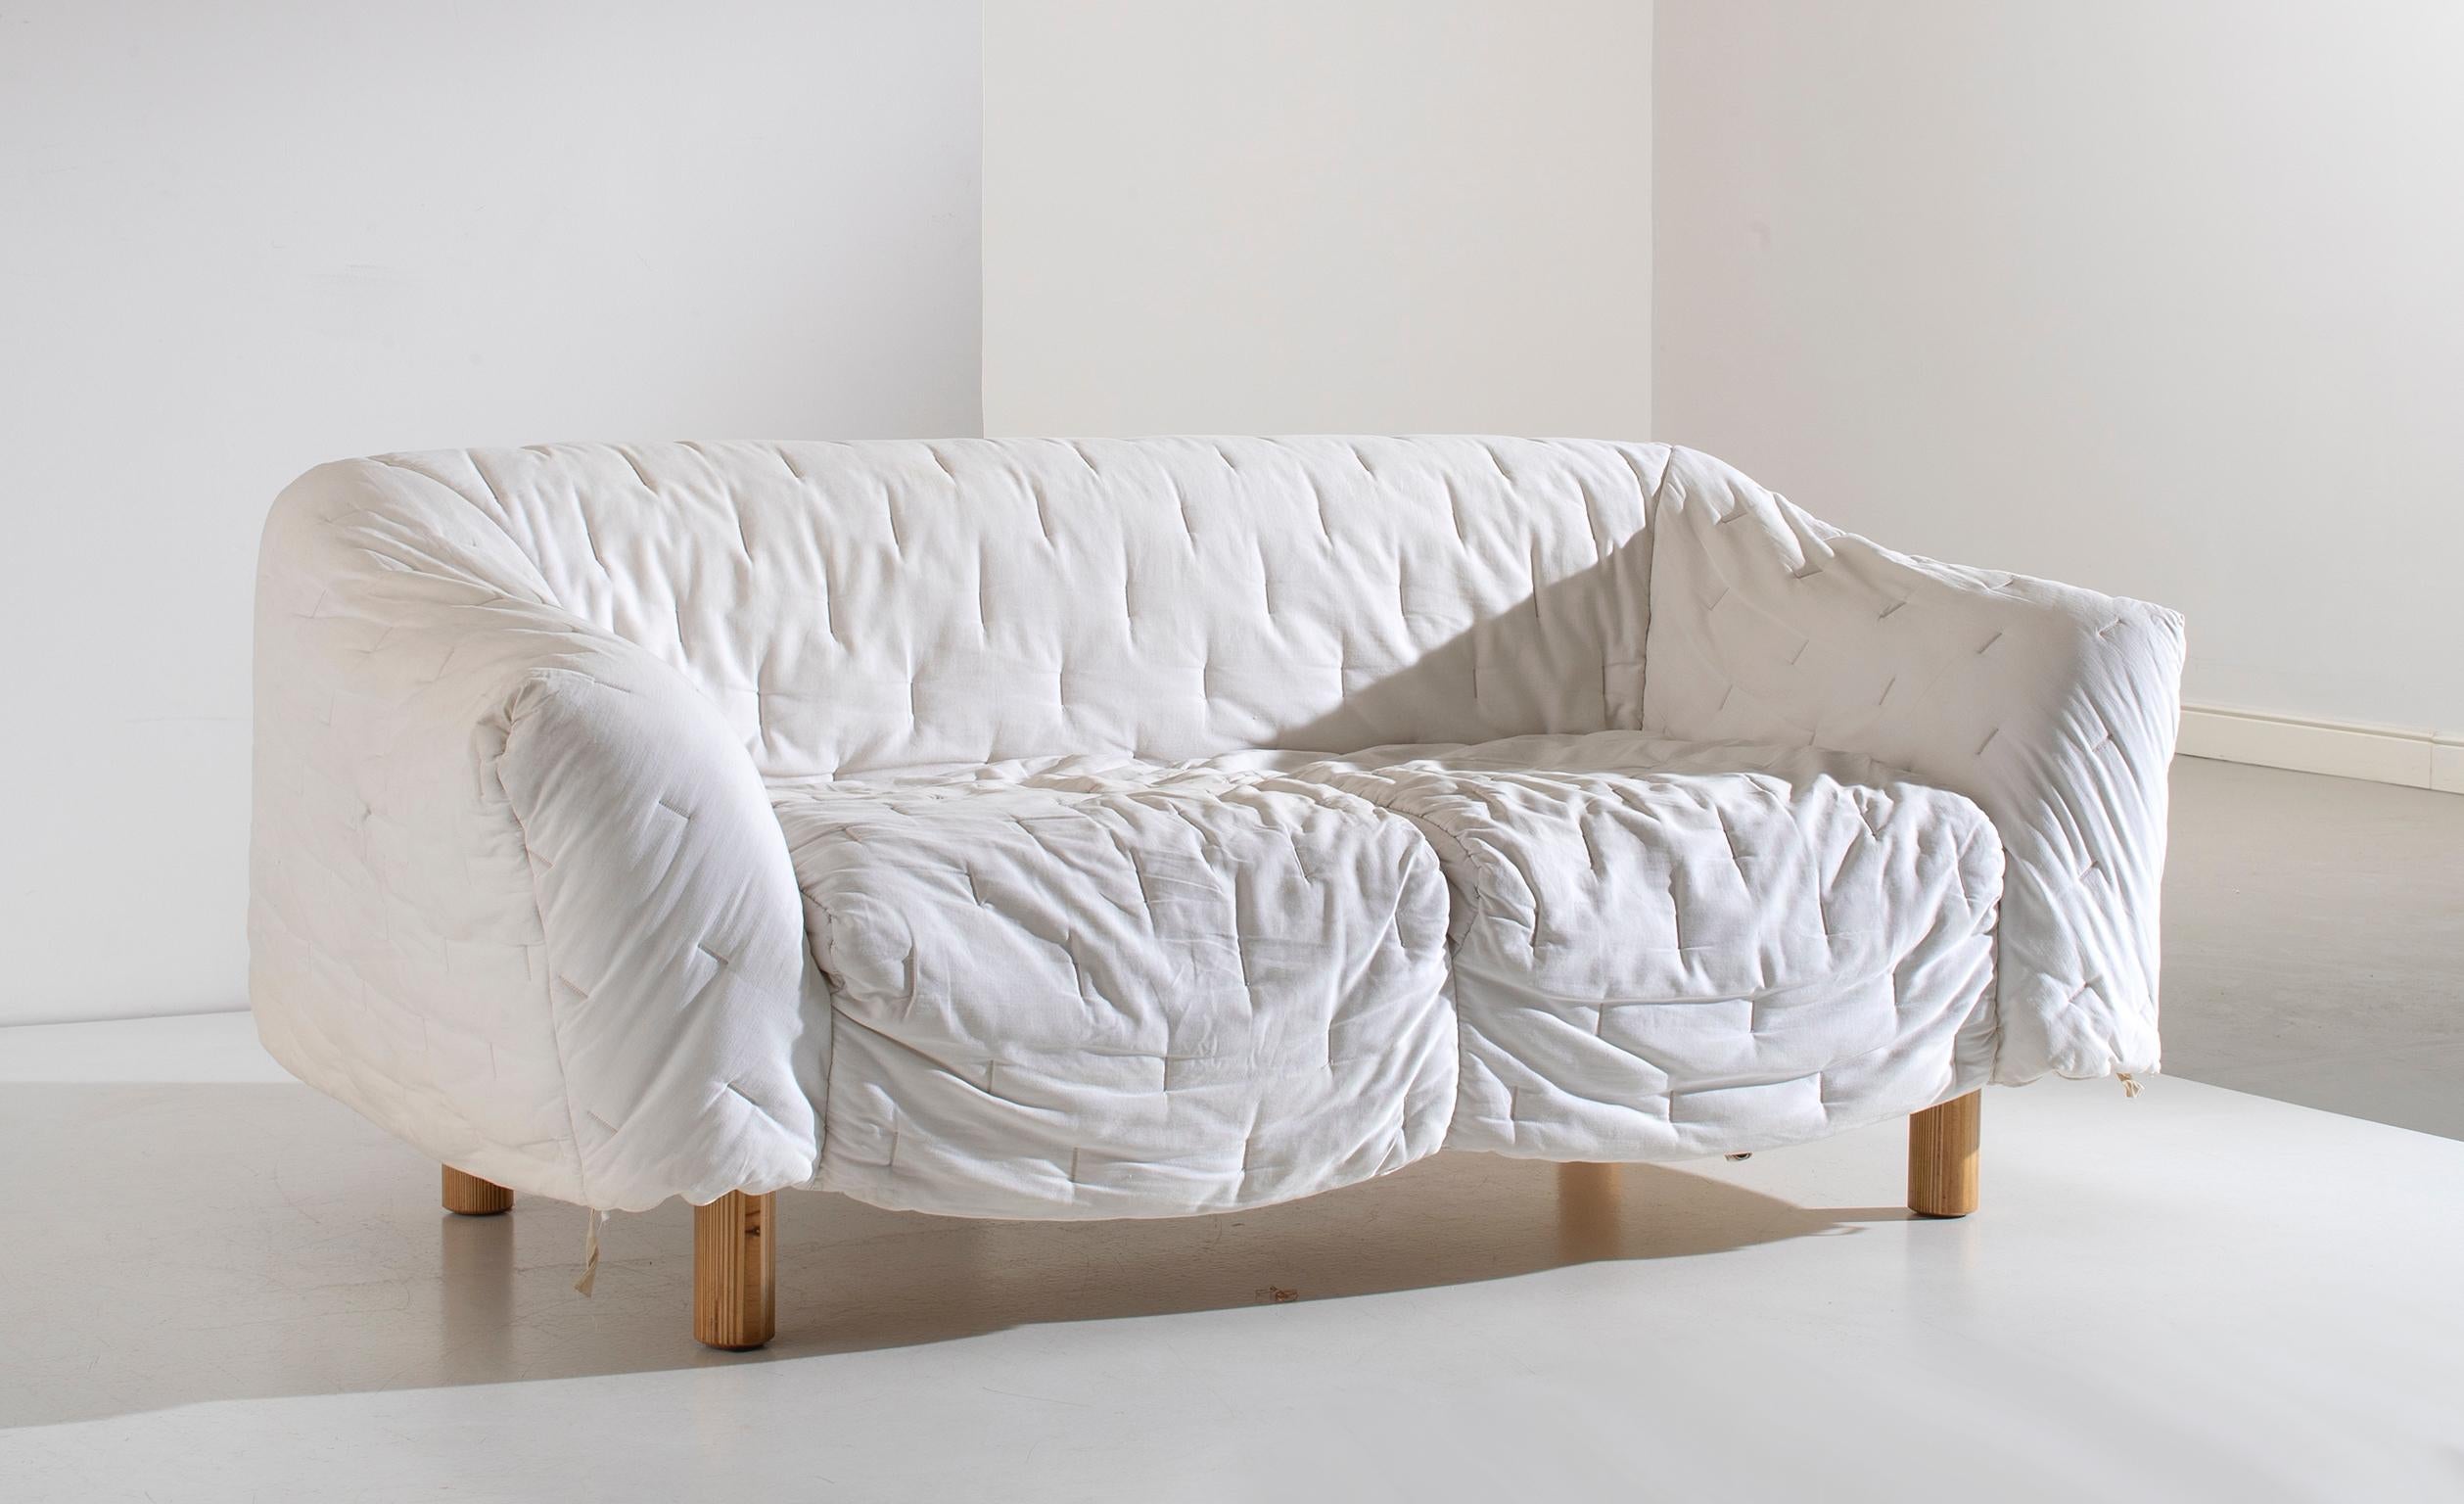 Pecorella model sofa. Turned wood, padded fabric. Driade production 1979.
G. Gramigna, 'Repertorio 1950-1980', Mondadori, 1985, pag. 467.